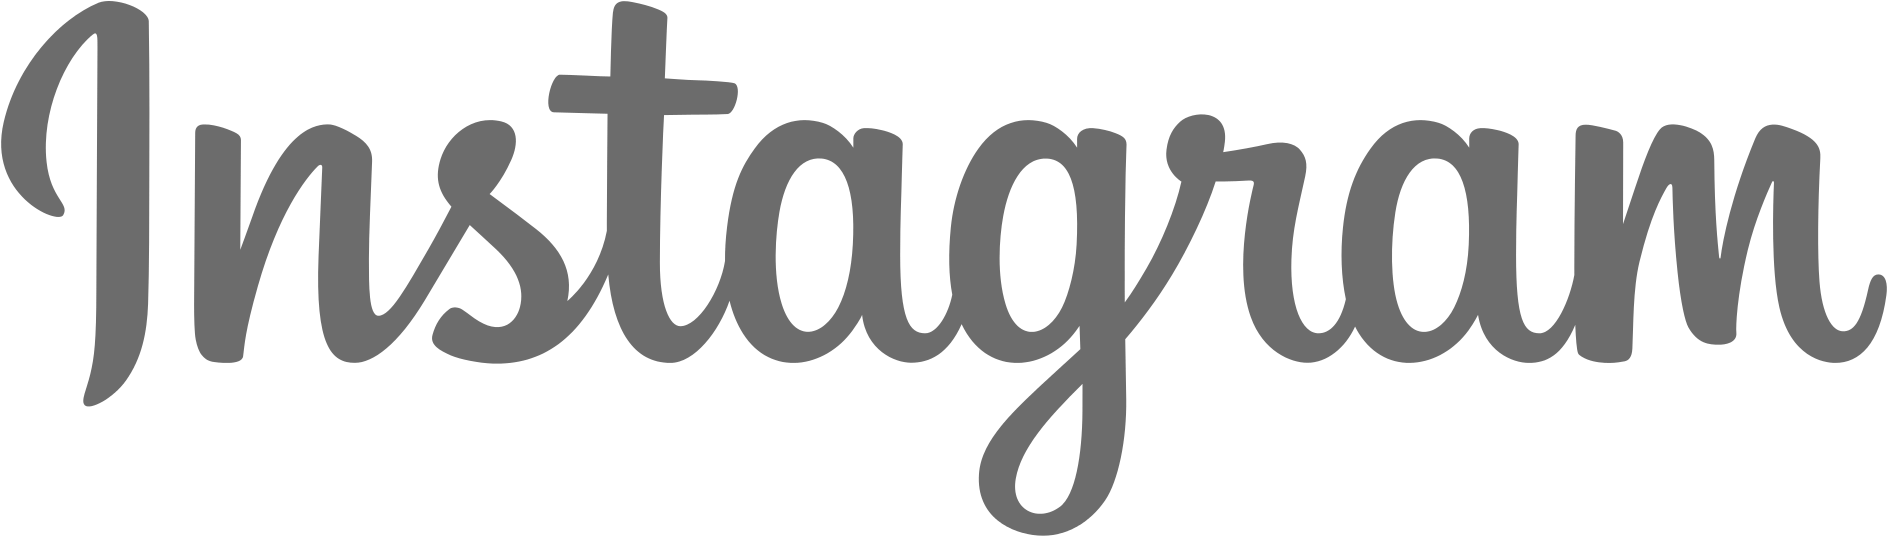 Logo Instagram PNG Download Free PNG Image